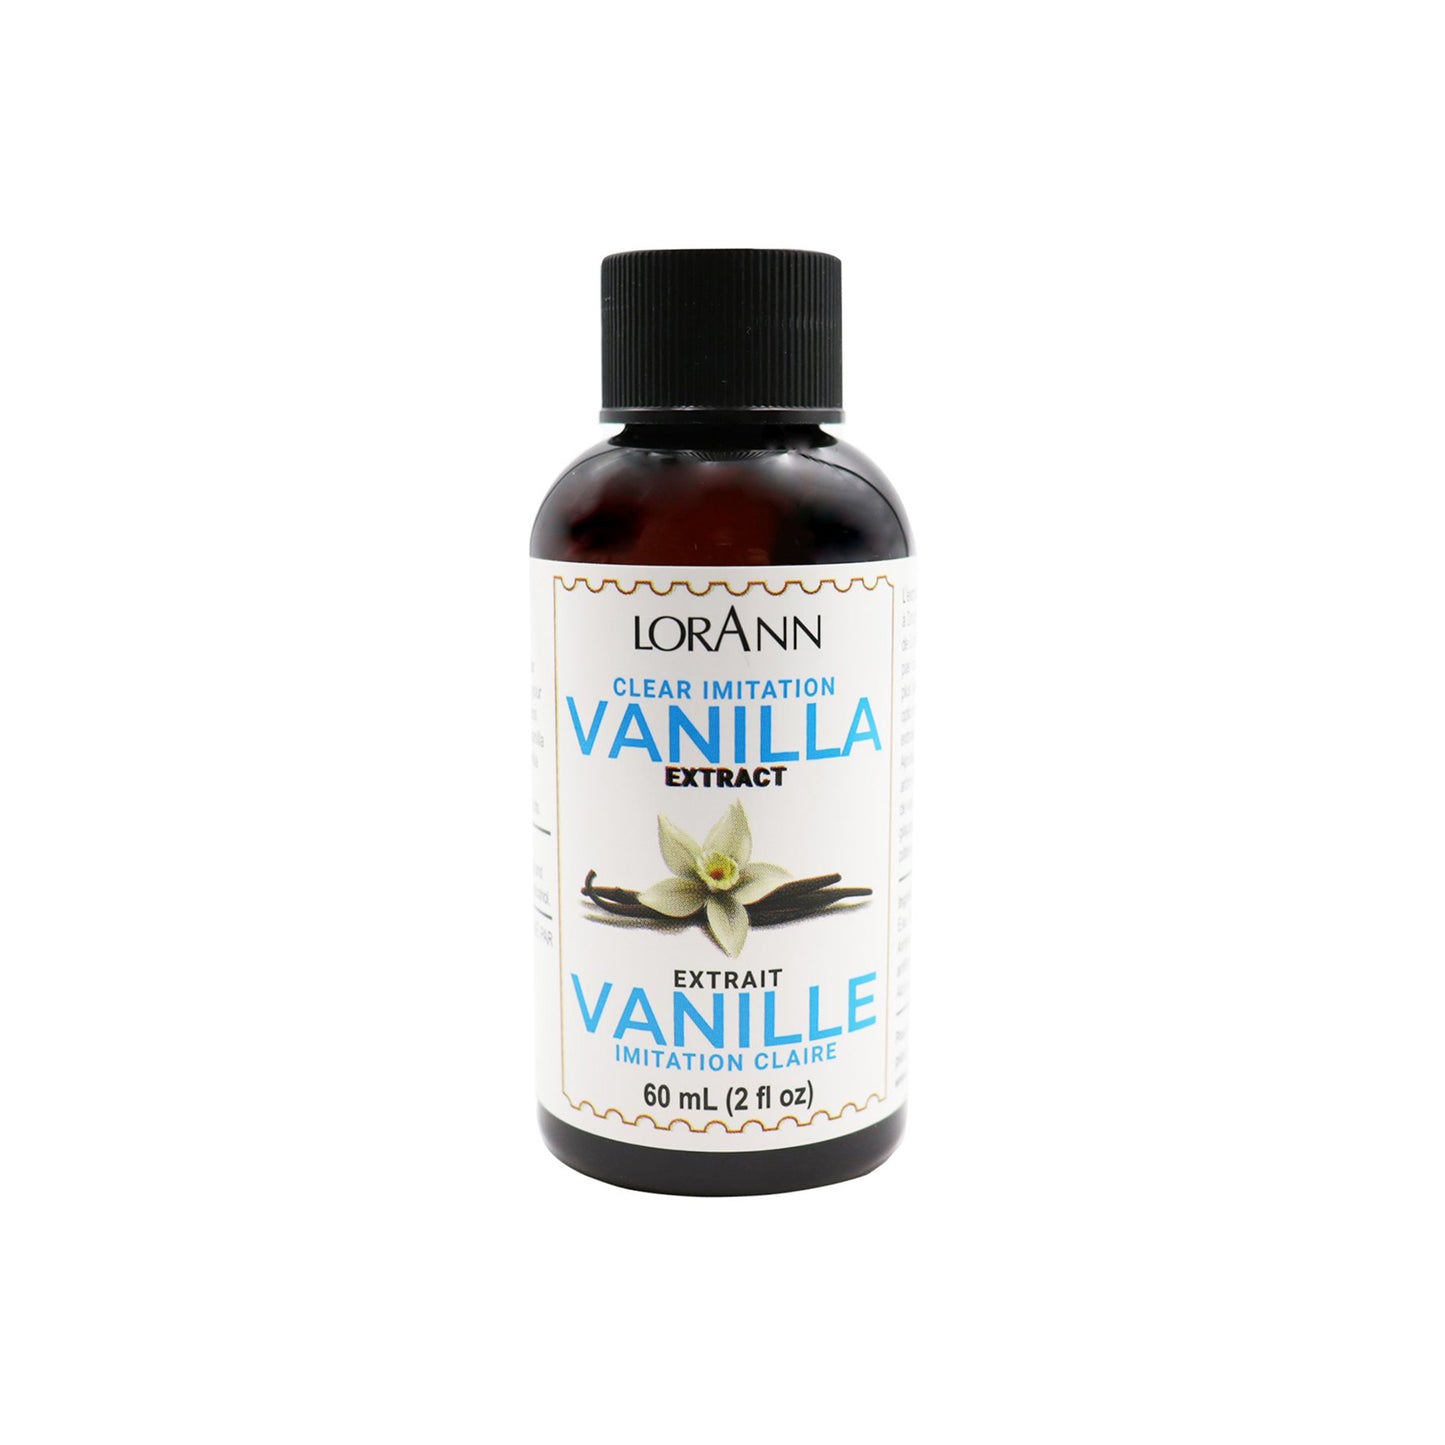 Lorann 2oz Clear Imitation Vanilla Extract